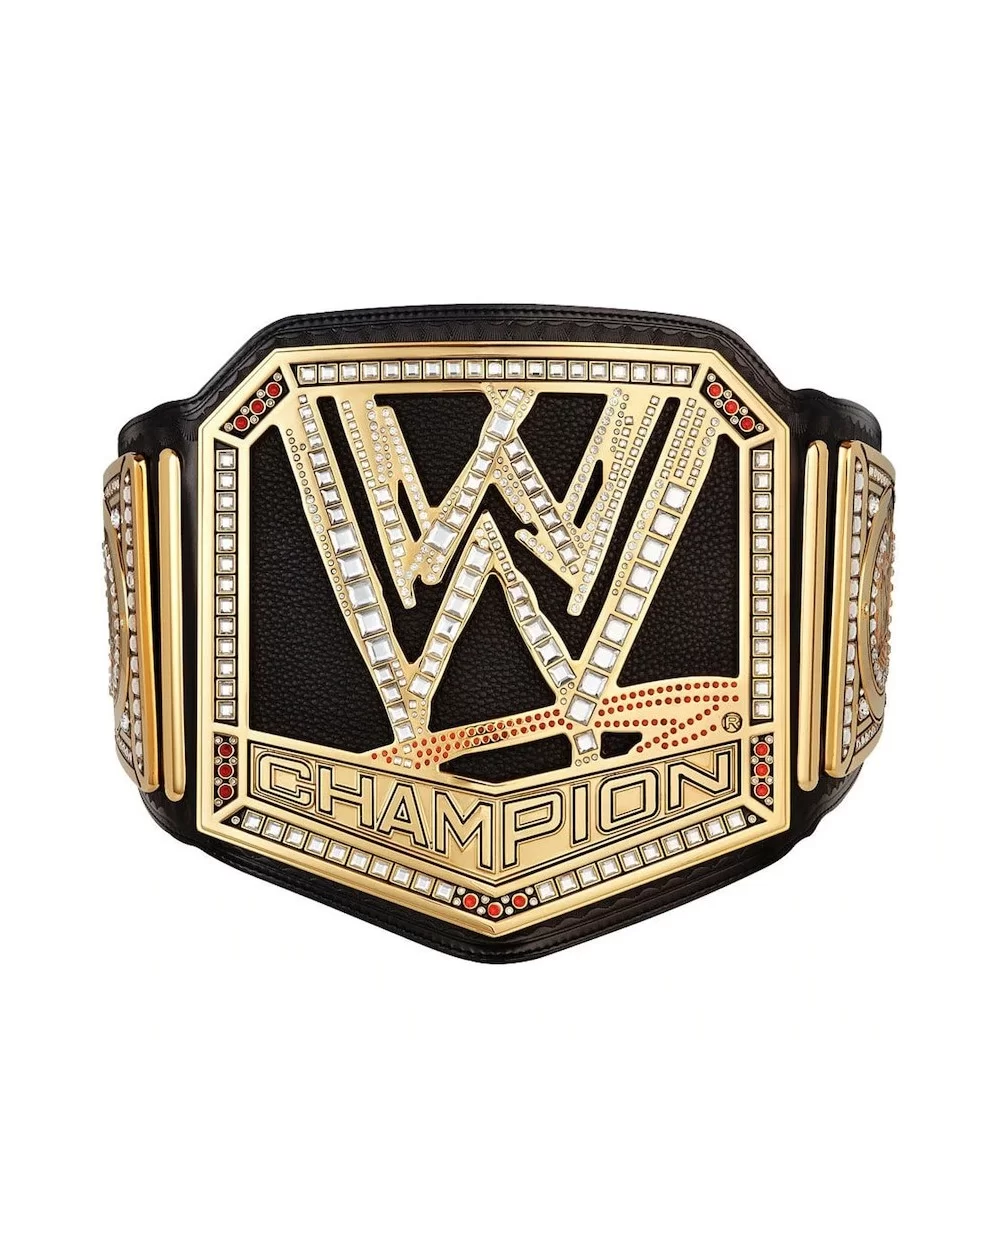 2013 WWE Championship Replica Title Belt $121.60 Title Belts